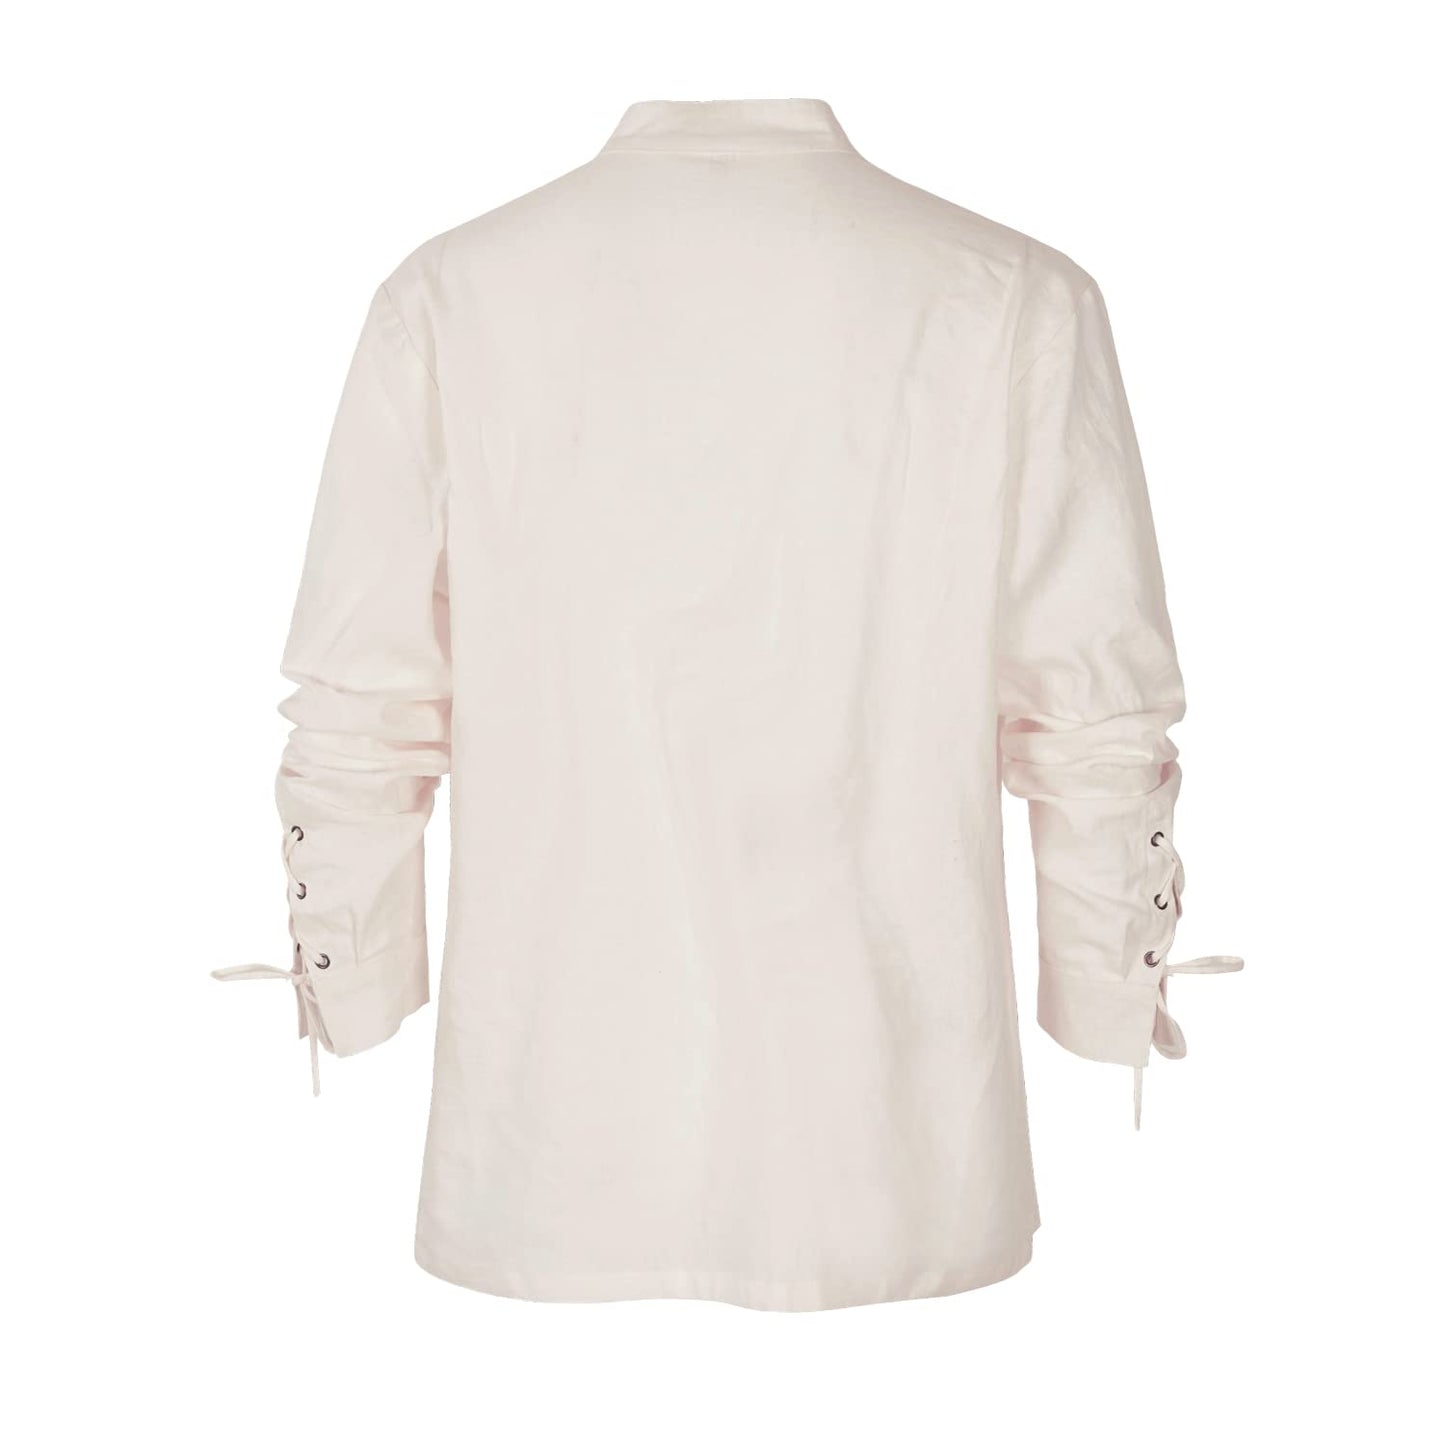 Men's Renaissance Shirt Pirate Medieval Viking top Linen Long Sleeved Halloween Costume X-Large Z2826ye